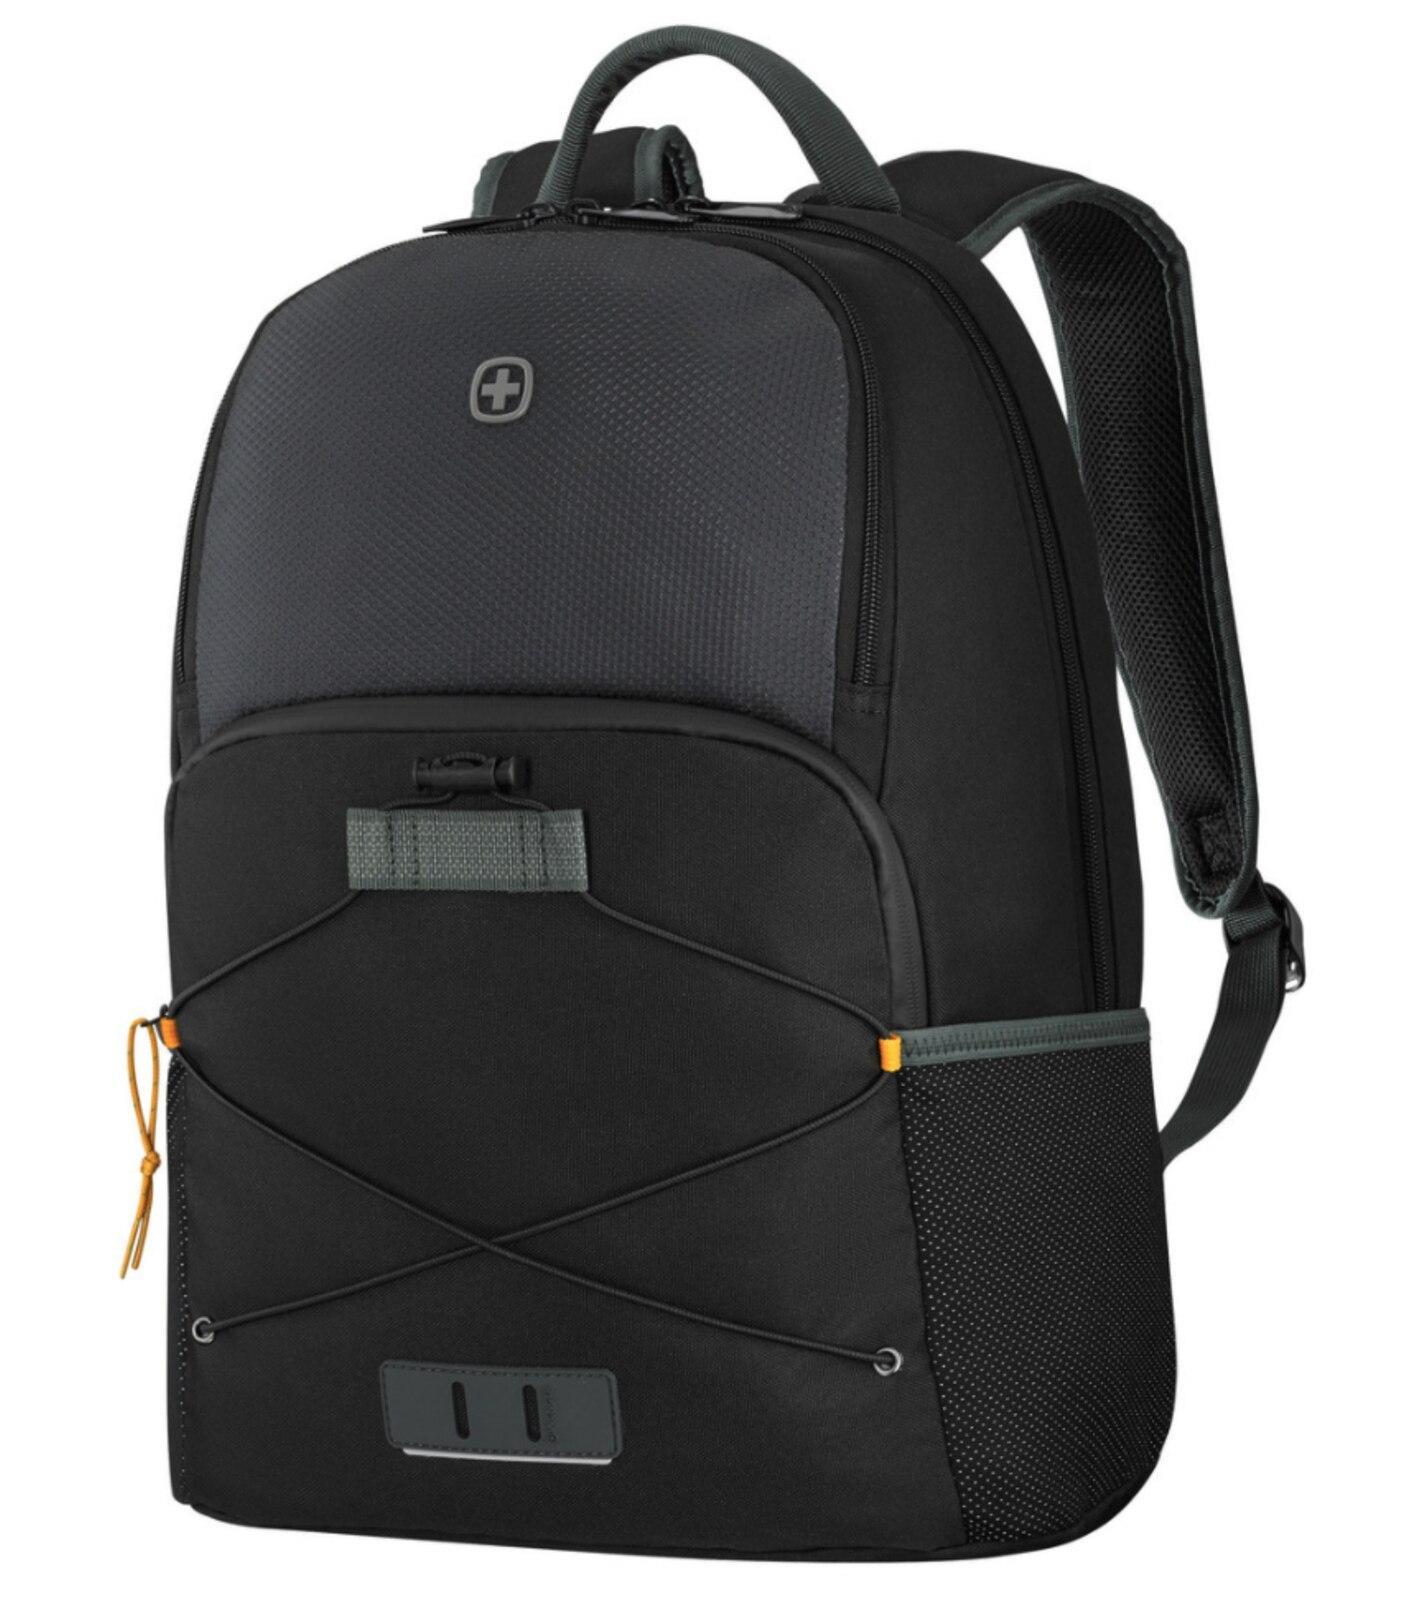 Wenger NEXT Trayl 15.6" Laptop Backpack - Gravity Black